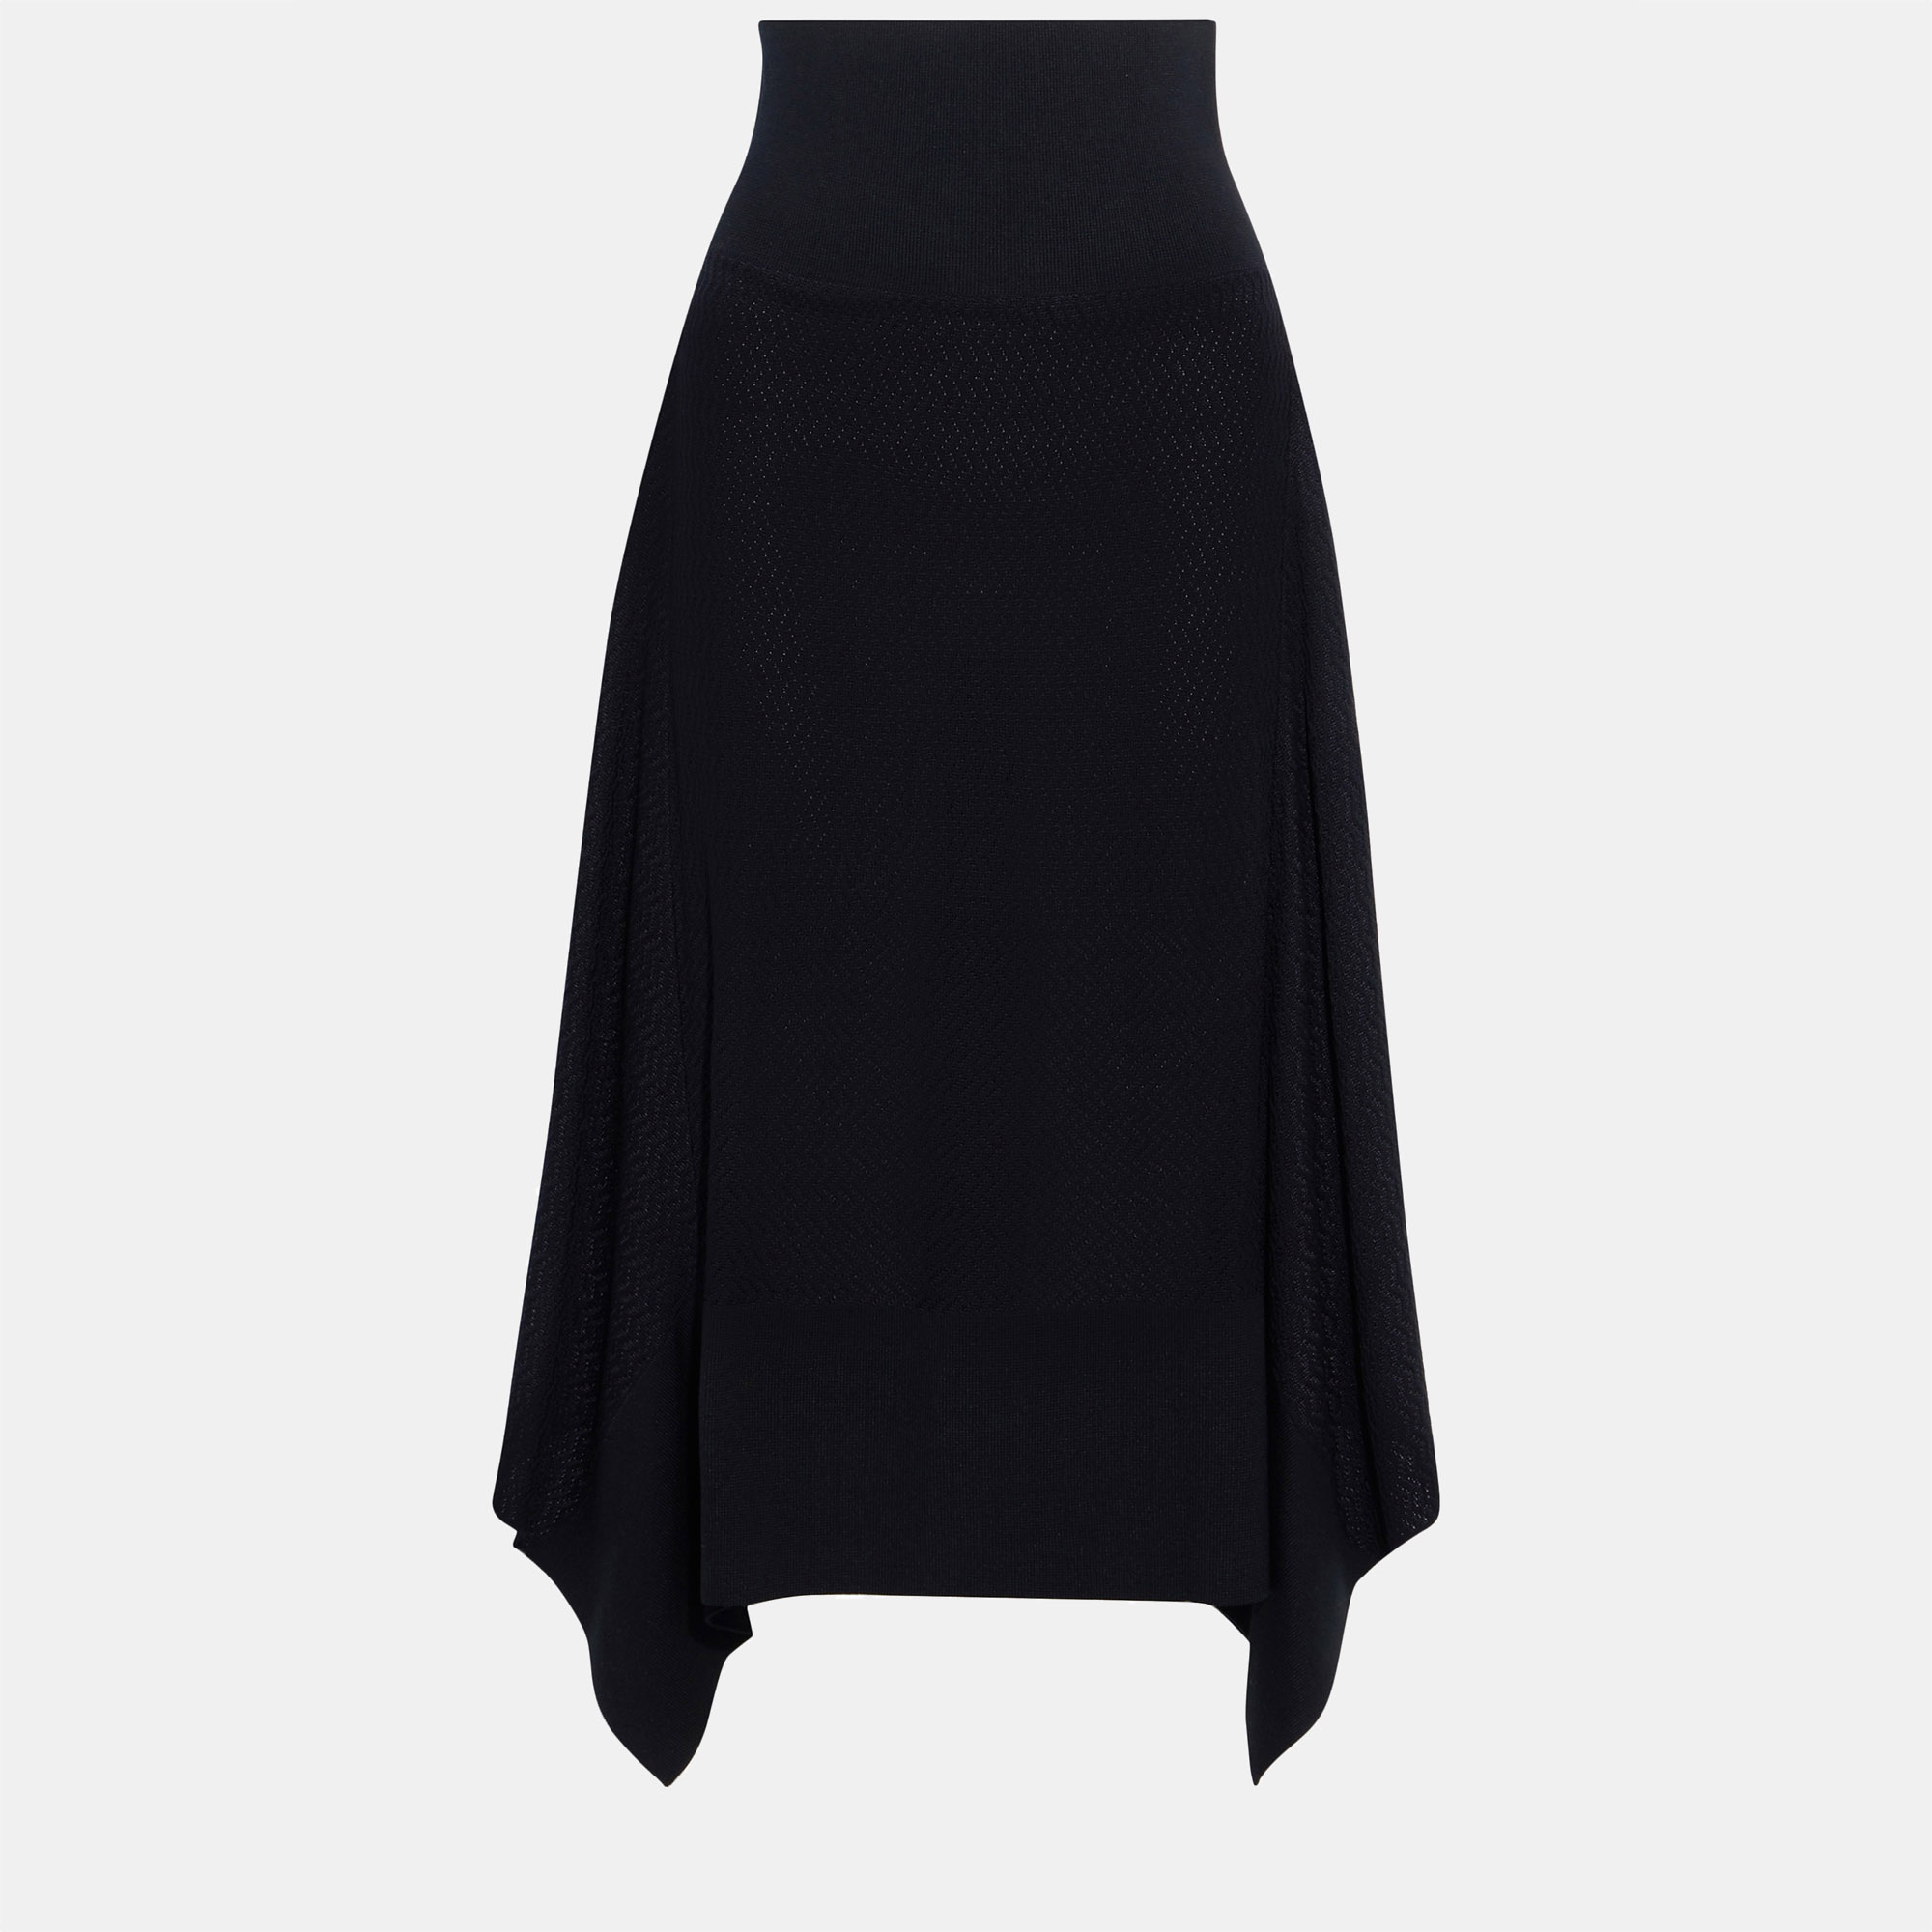 Stella mccartney black patterned midi skirt m (it 42)